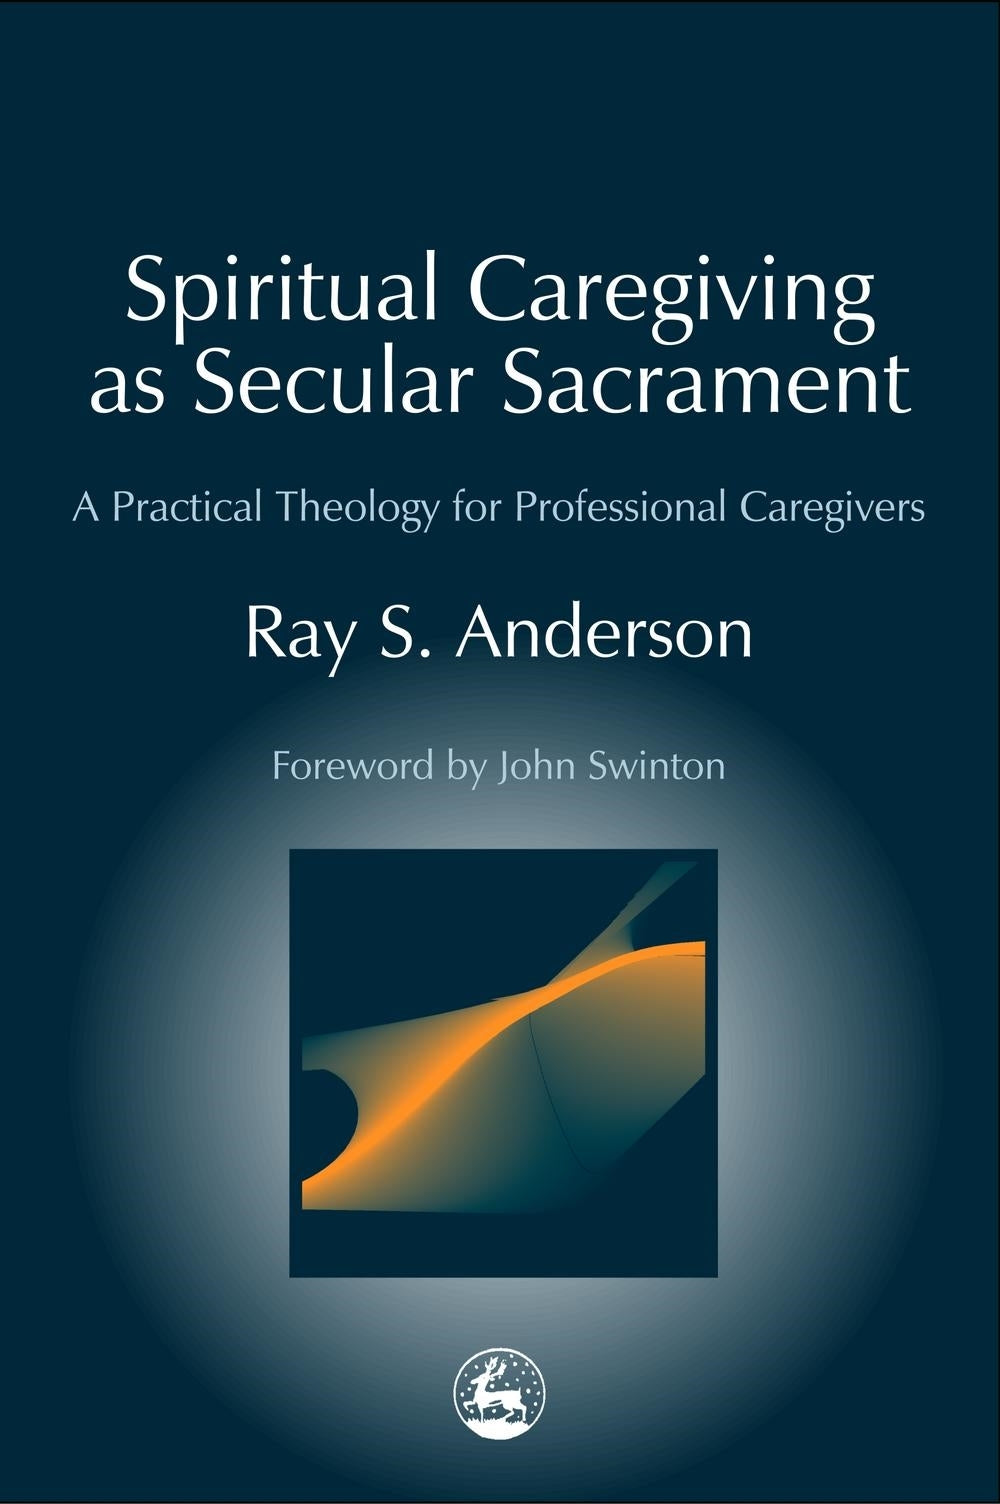 Spiritual Caregiving as Secular Sacrament by John Swinton, Ray Anderson